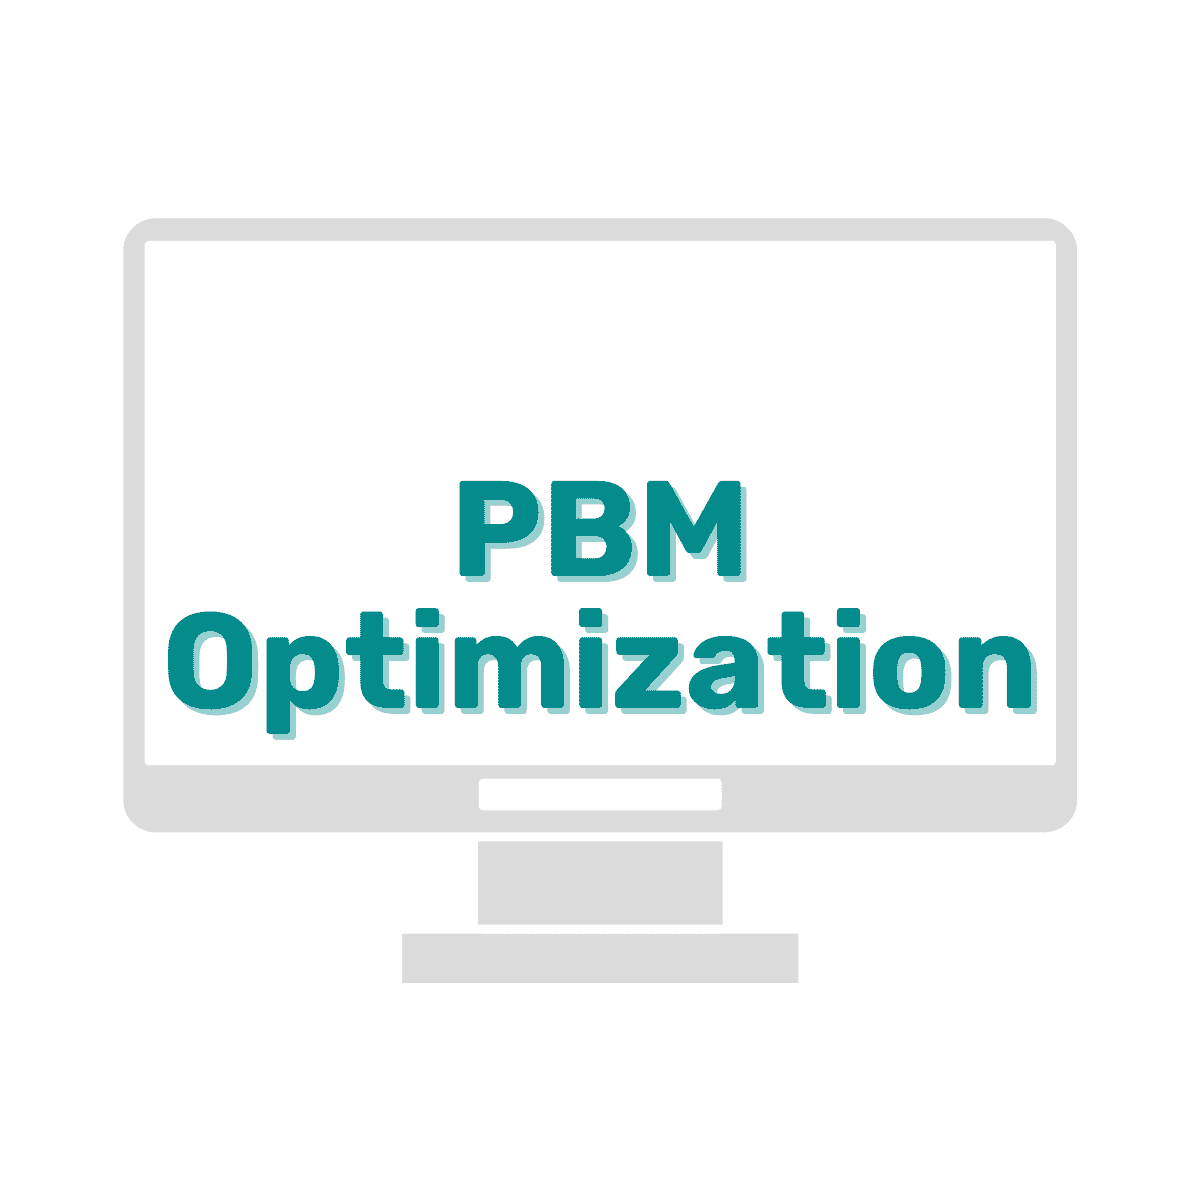 pbm optimization